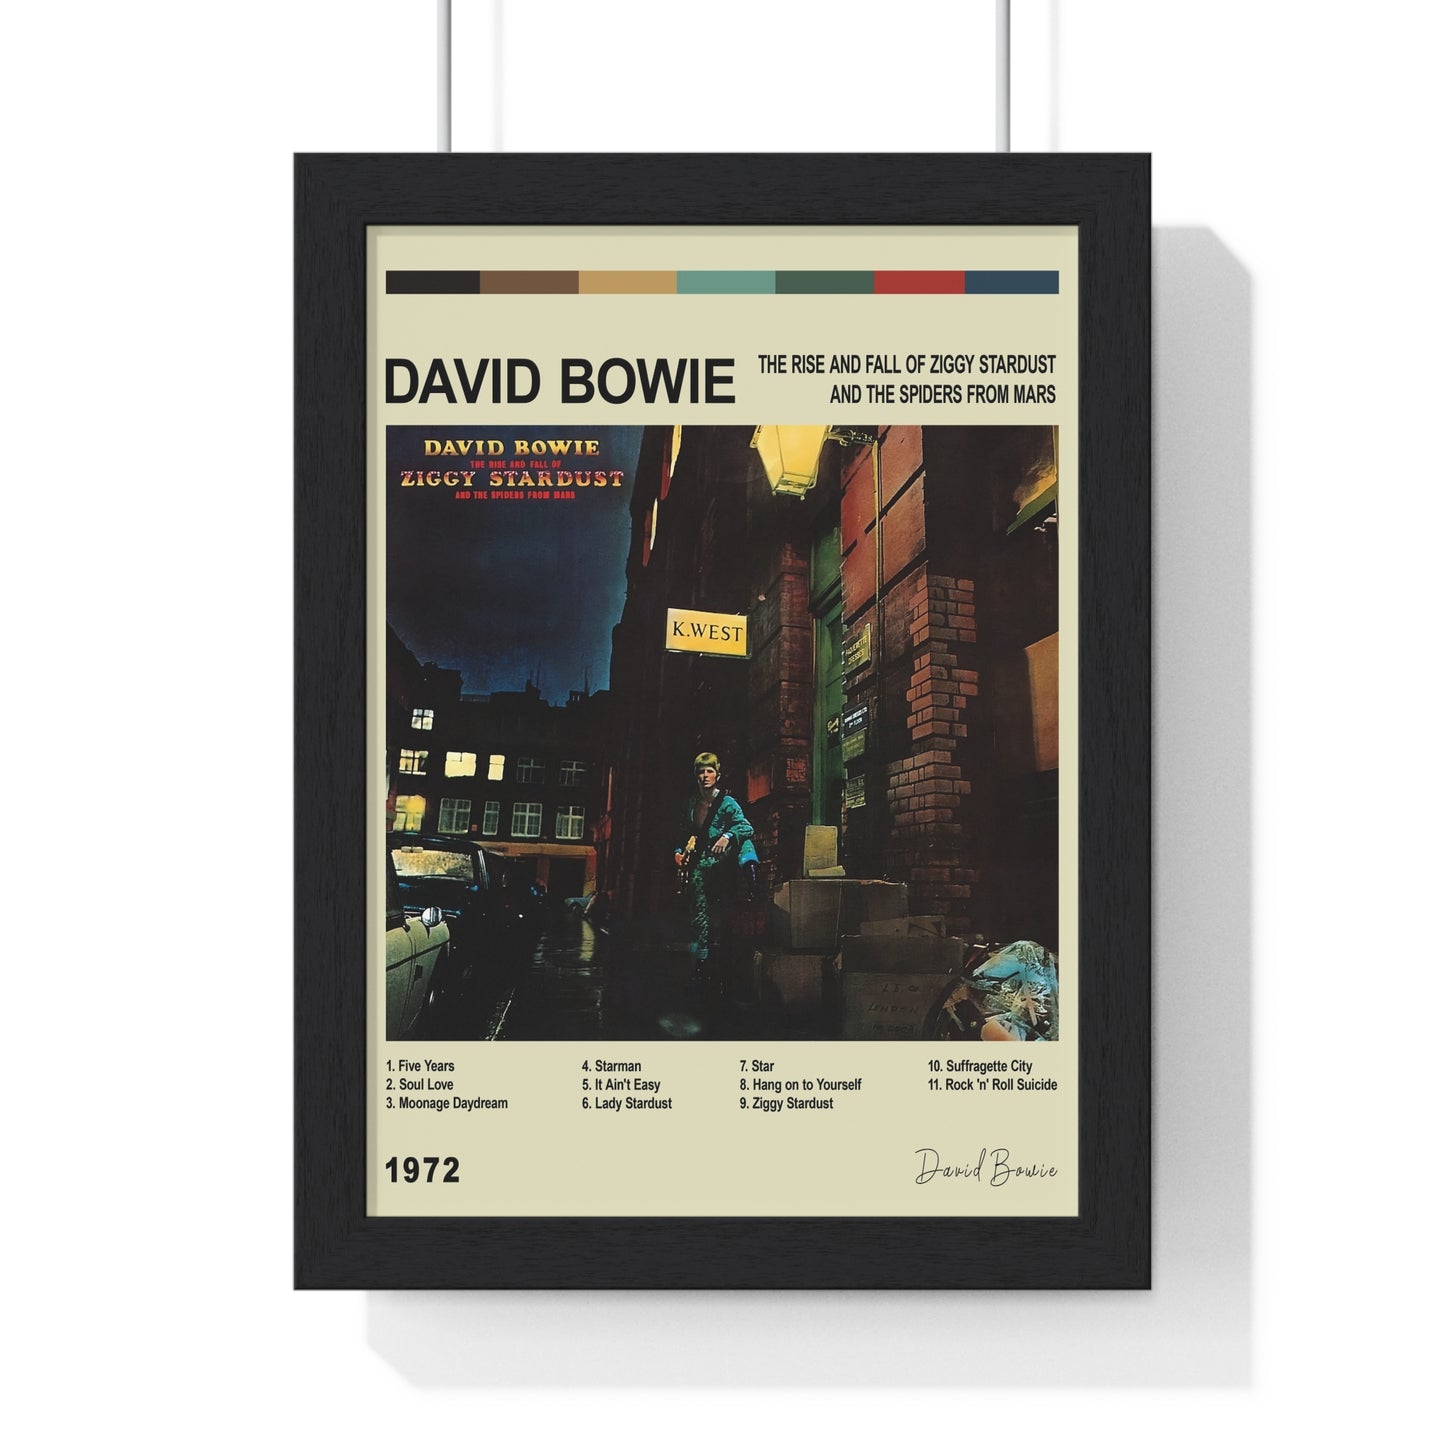 David Bowie Album Collection Poster